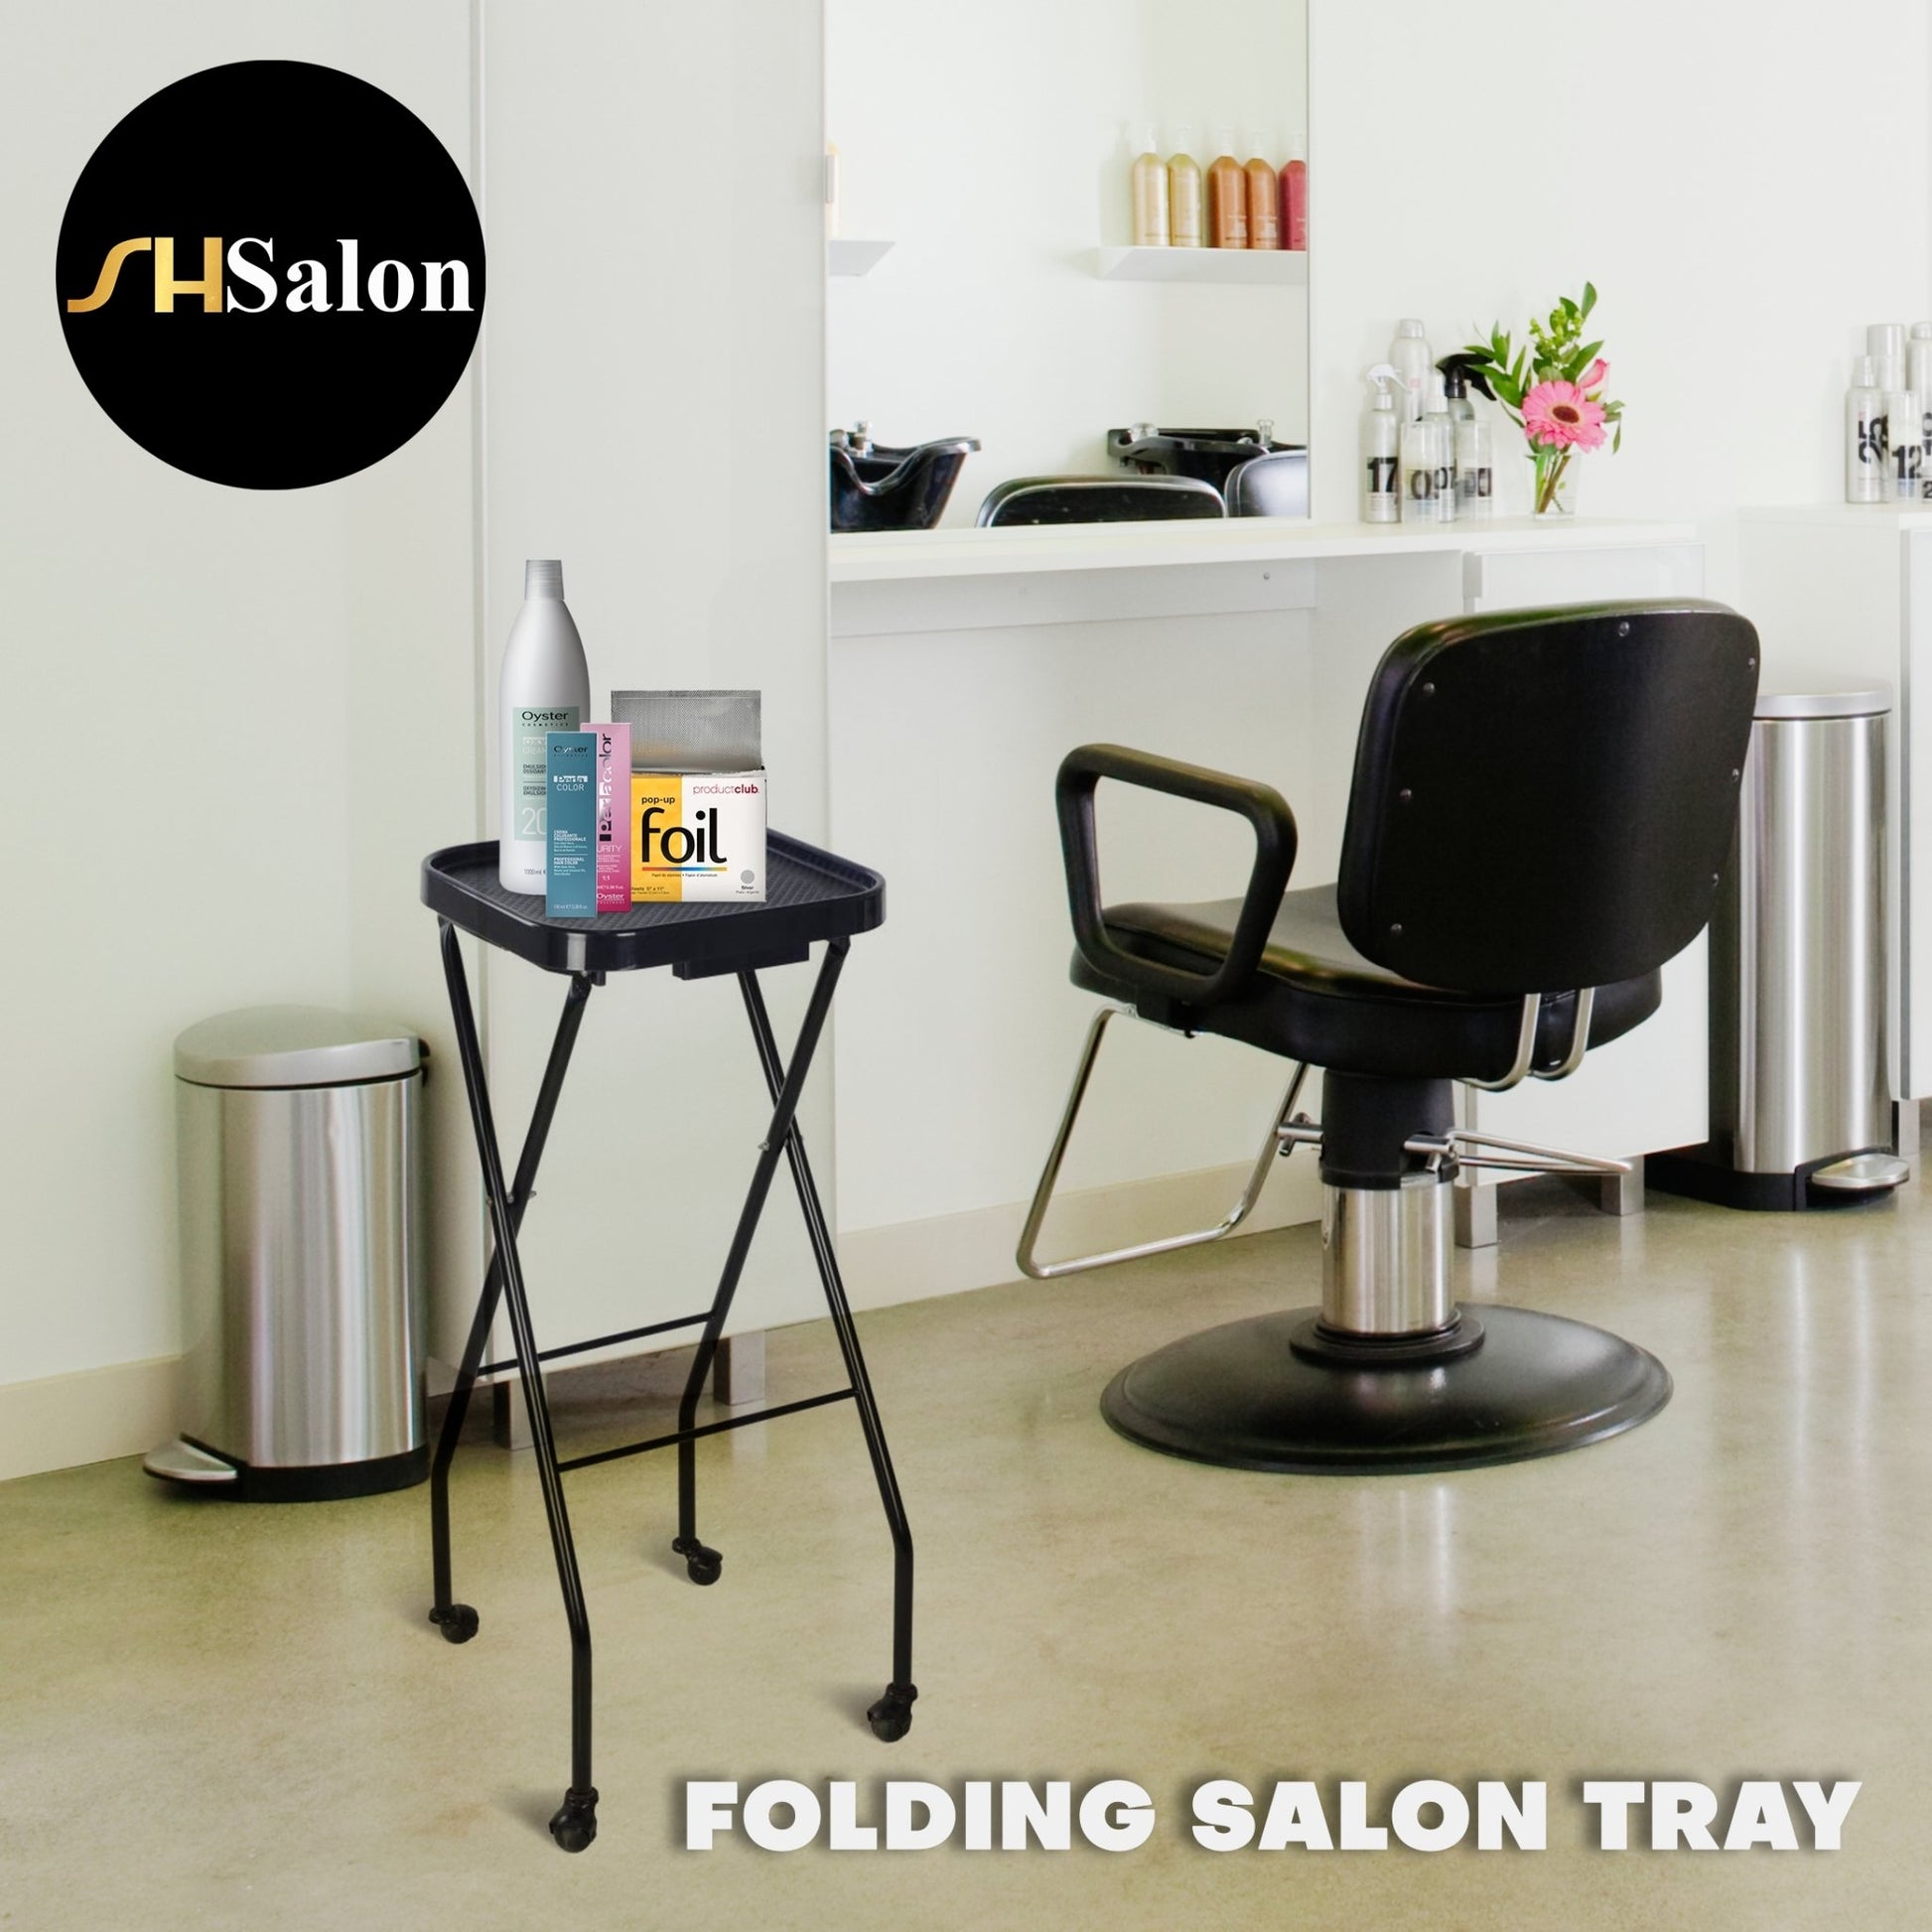 SF-001 | Folding Salon Tray | Tray Station Black on Wheels | Hair Salon Accessories - SH Salons